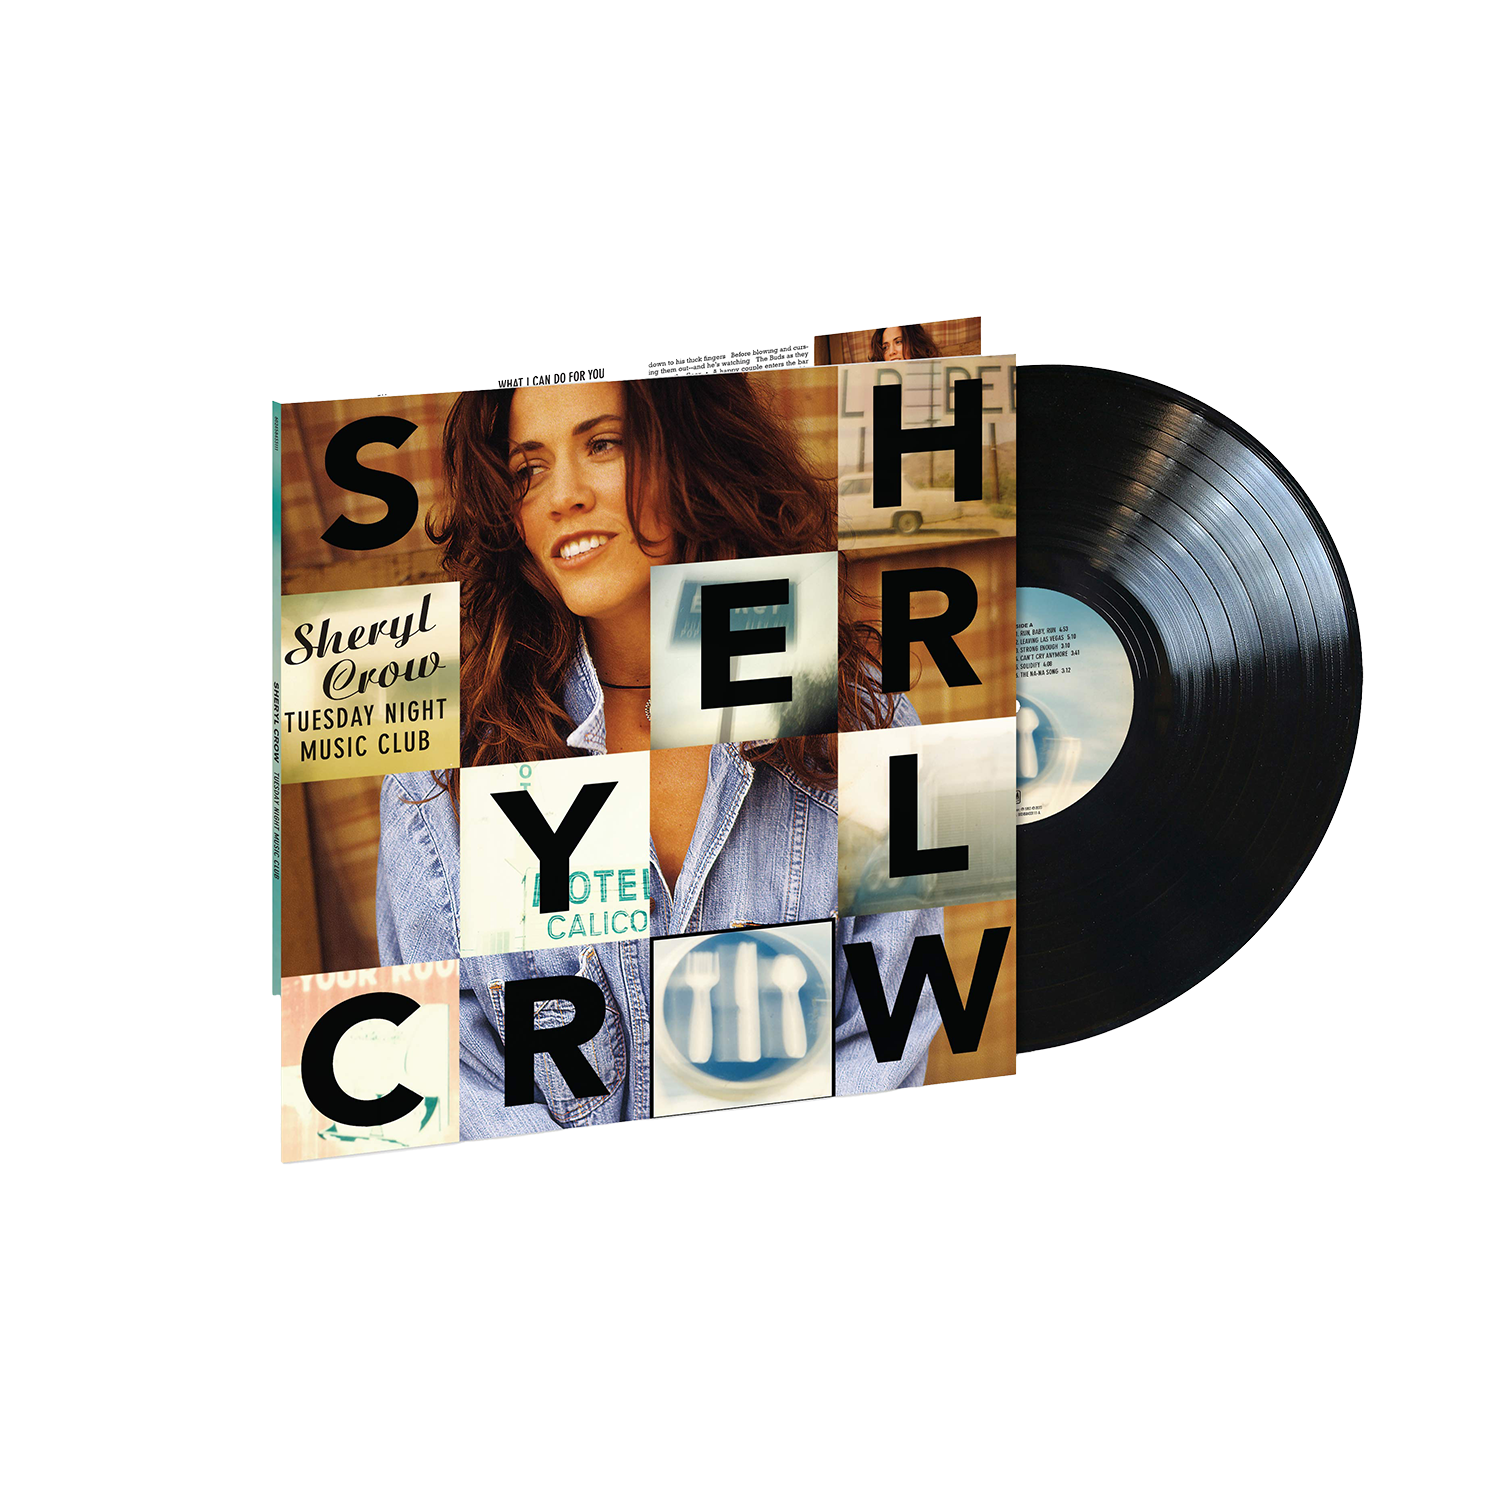 Sheryl Crow - Tuesday Night Music Club: Vinyl LP